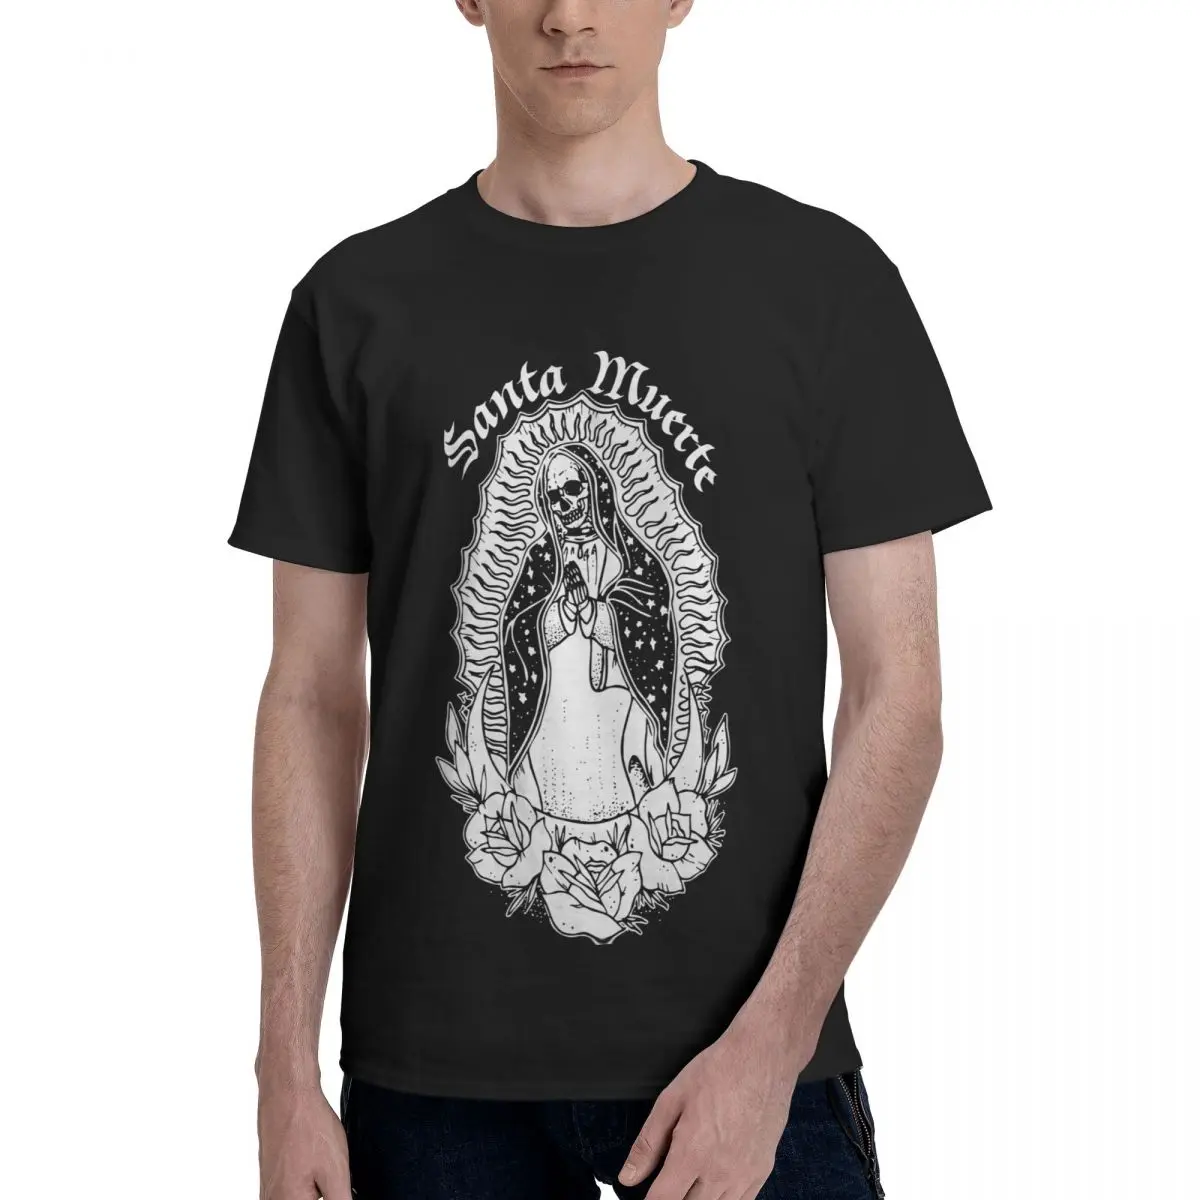 Santa Muerte Saint Death Cholo Classic Goddess Men's Hipster Short Sleeve Crewneck Cotton New Arrival T-Shirt